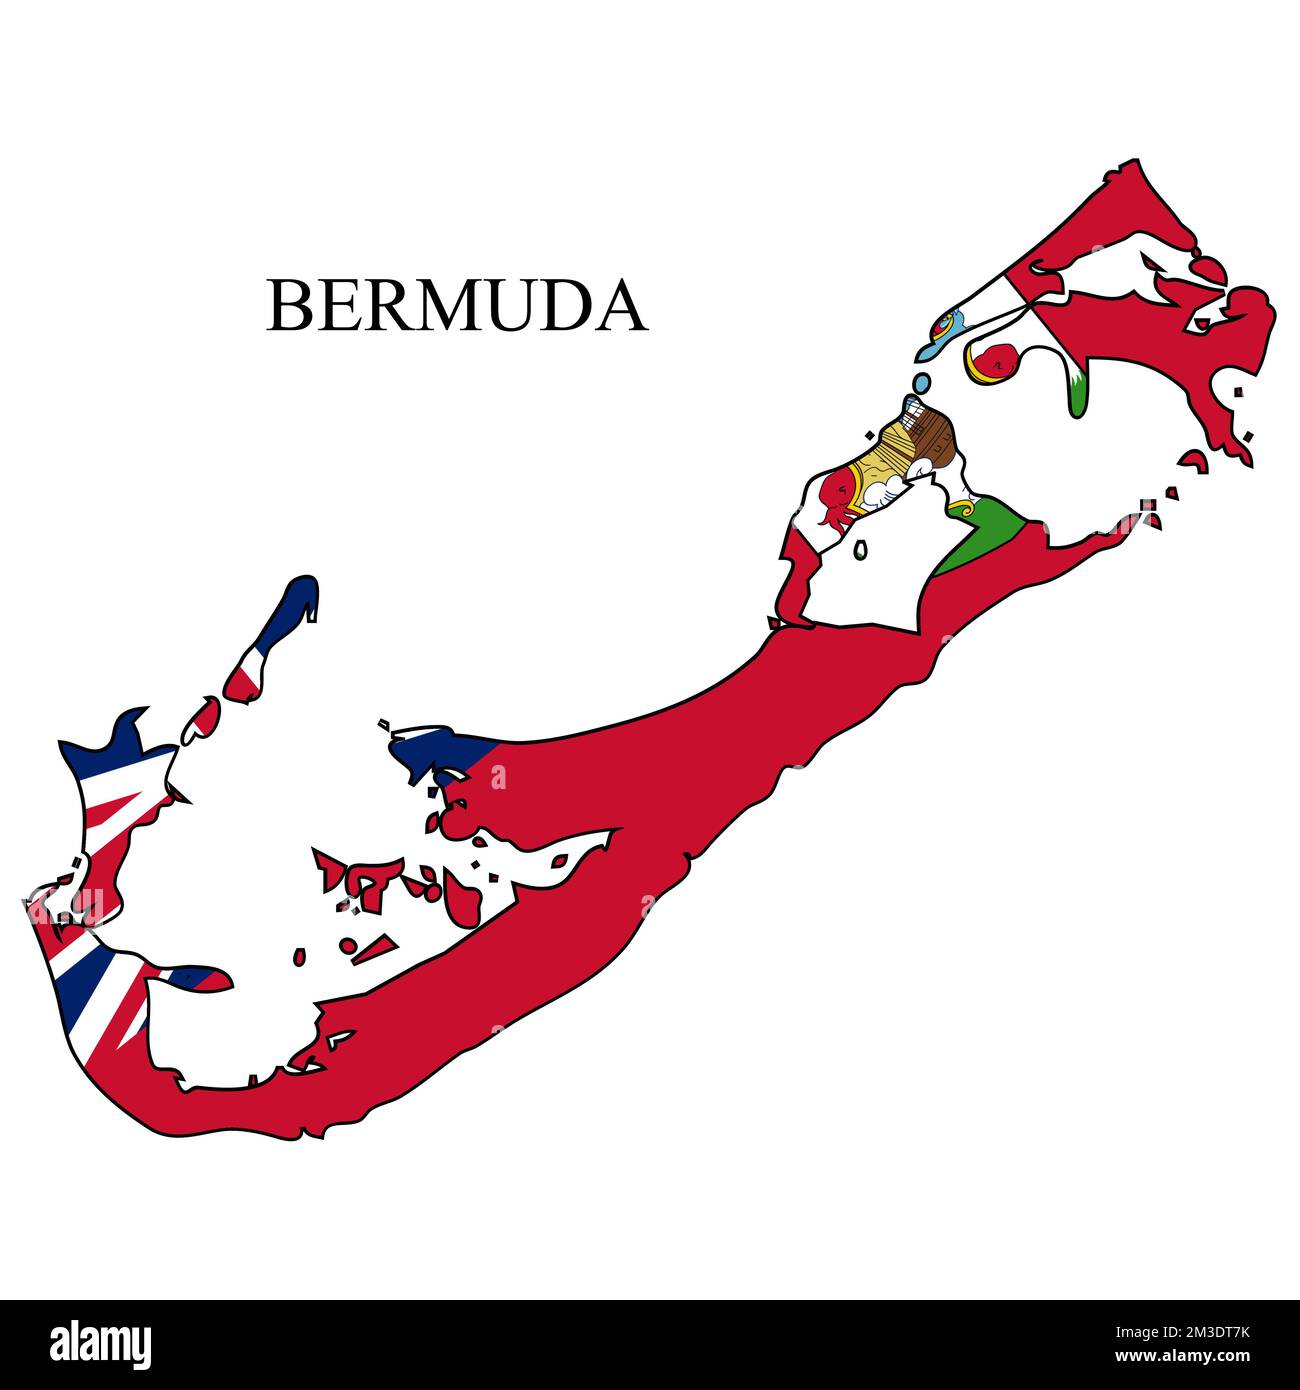 Bermuda-Kartenvektordarstellung. Weltwirtschaft. Berühmtes Land. Nordamerika. Amerika. Stock Vektor